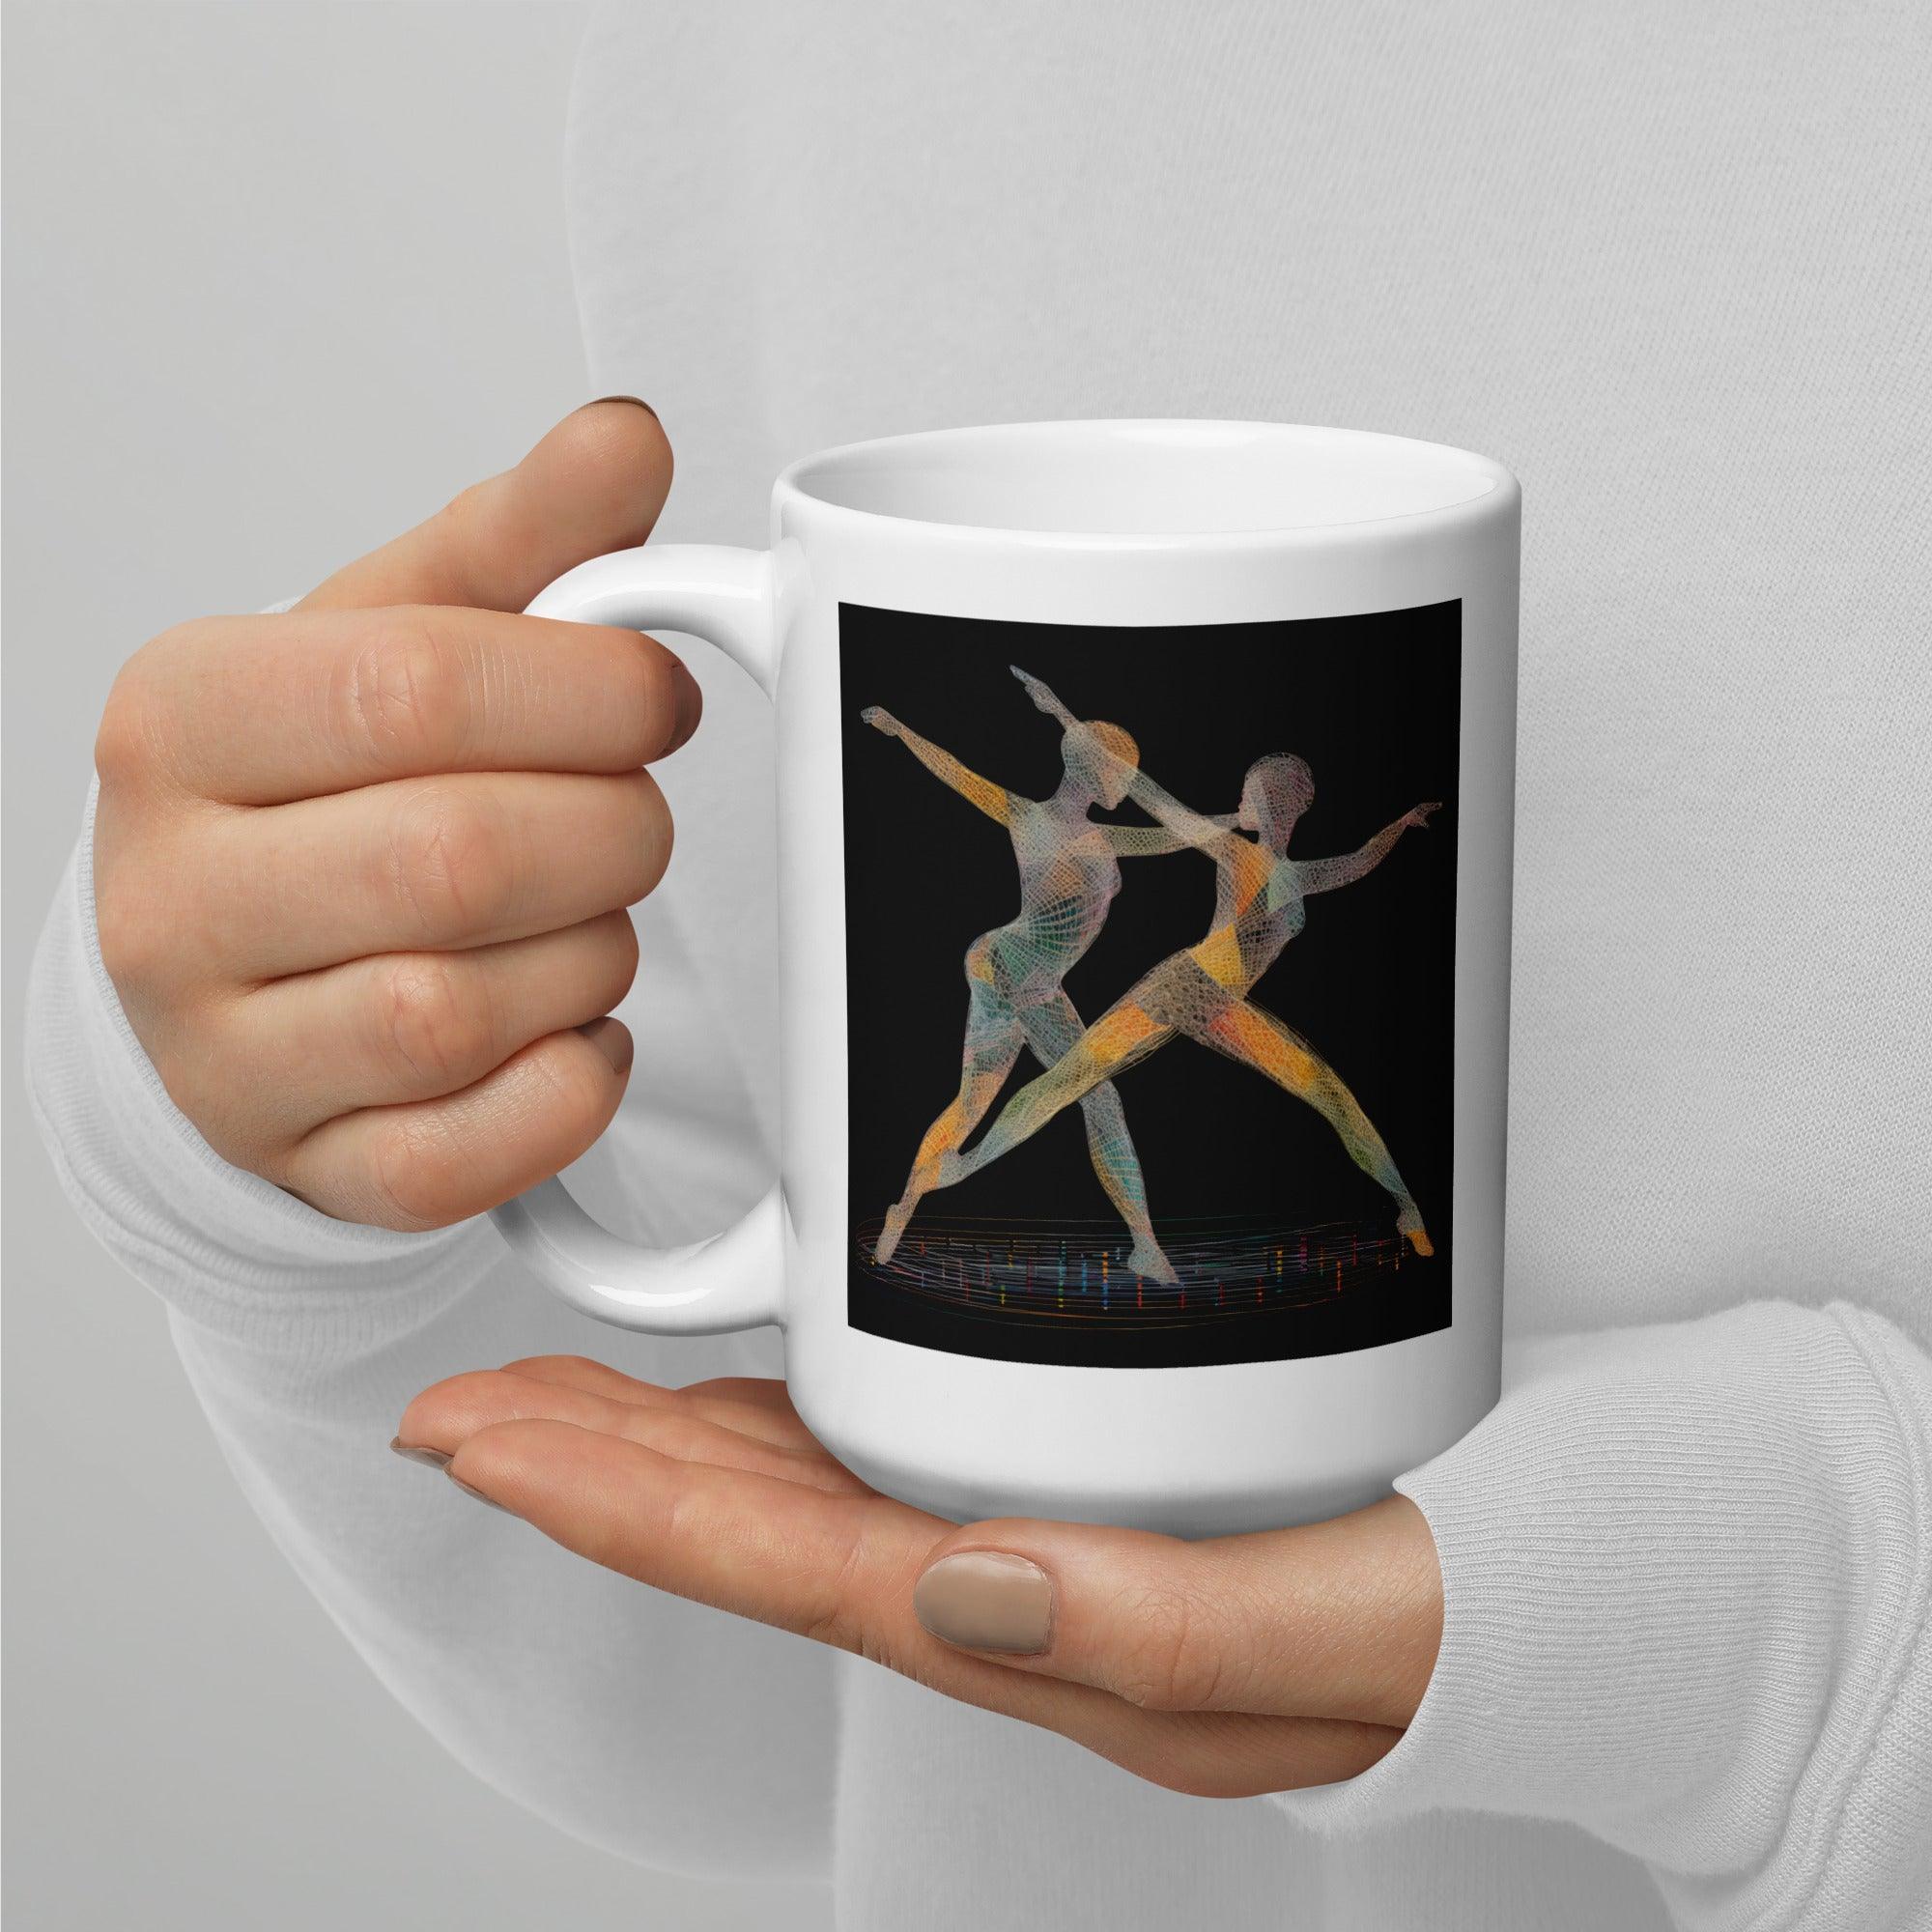 Ceramic mug with glossy finish showcasing an enchanting dance motif.